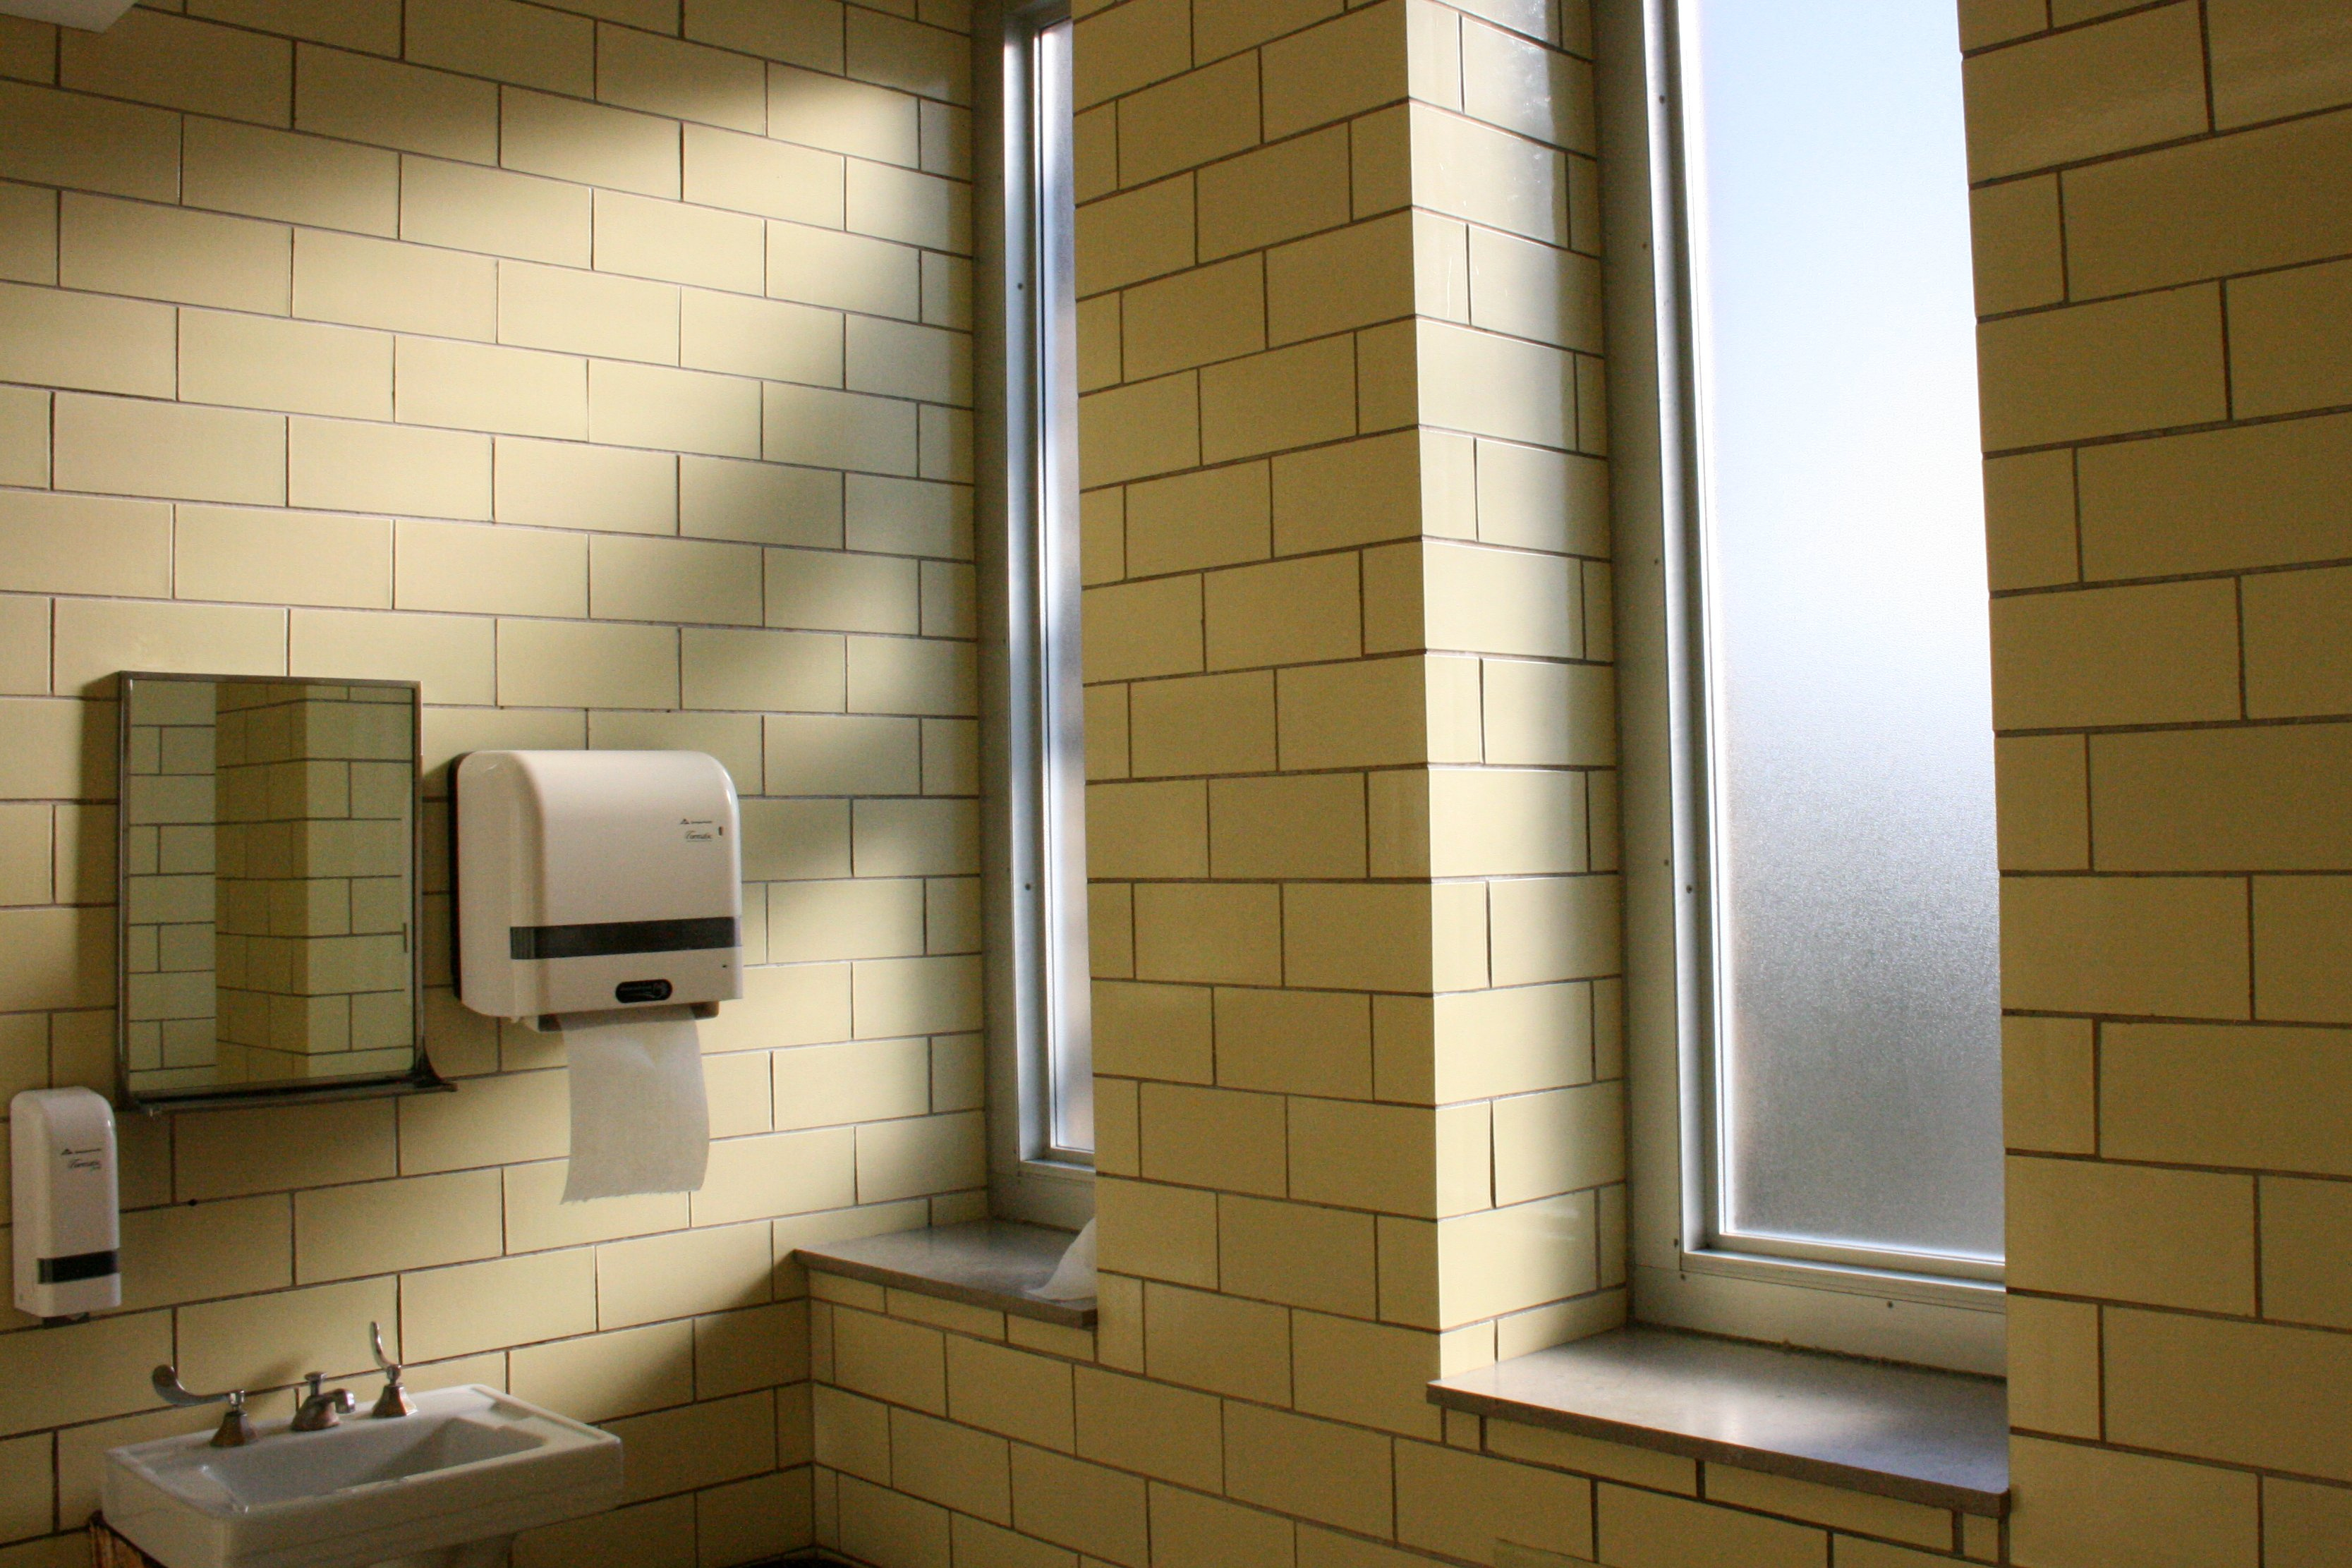 An empty school bathroom